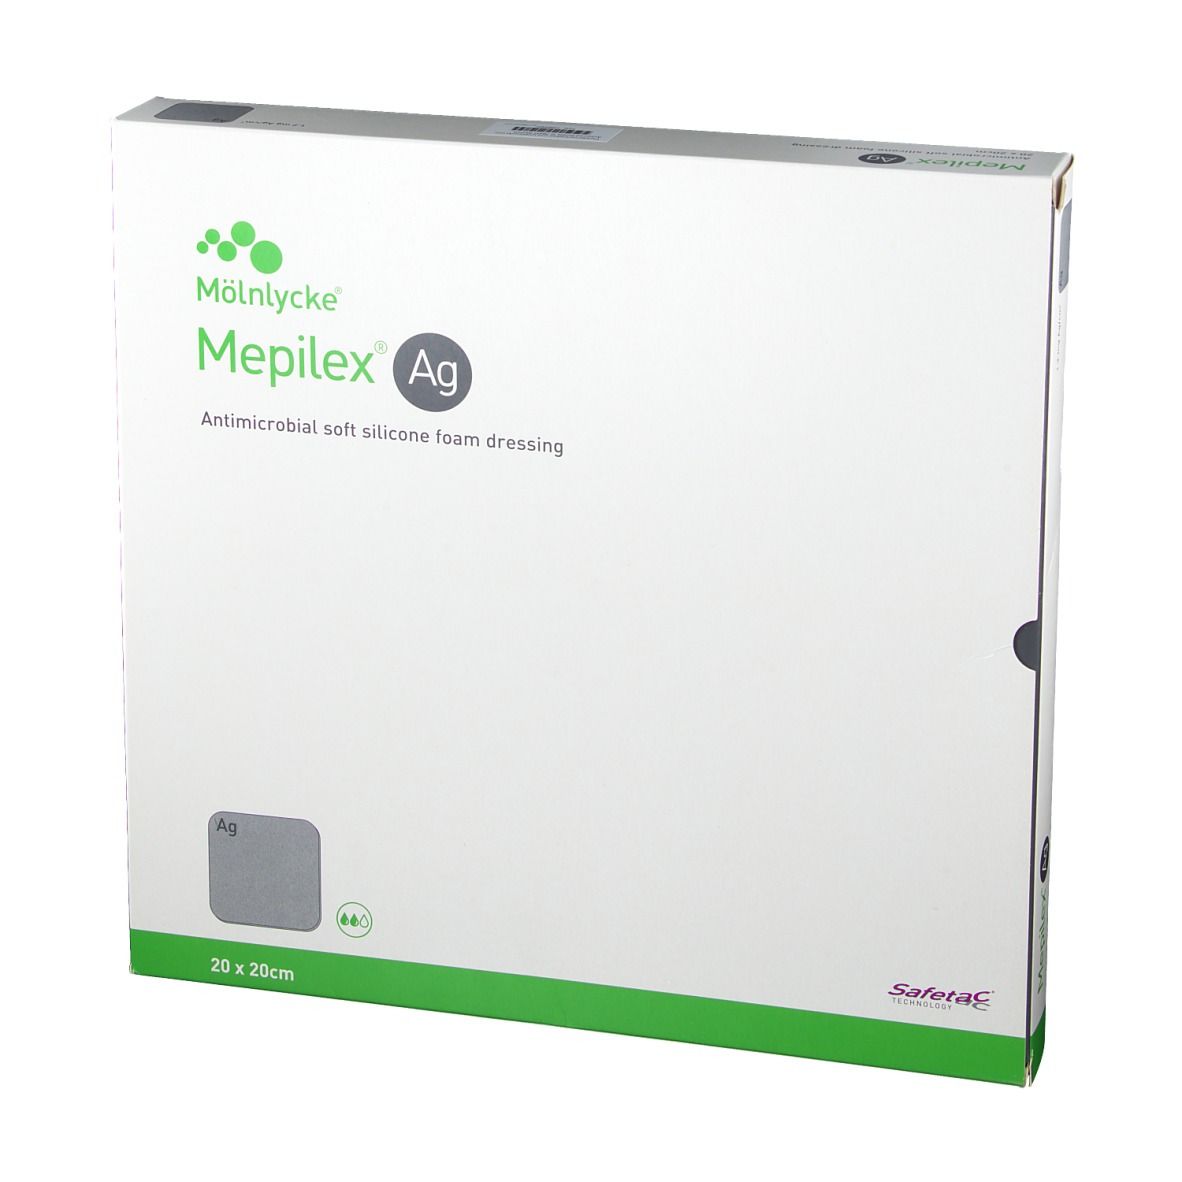 Mepilex® Ag 20 x 20 cm